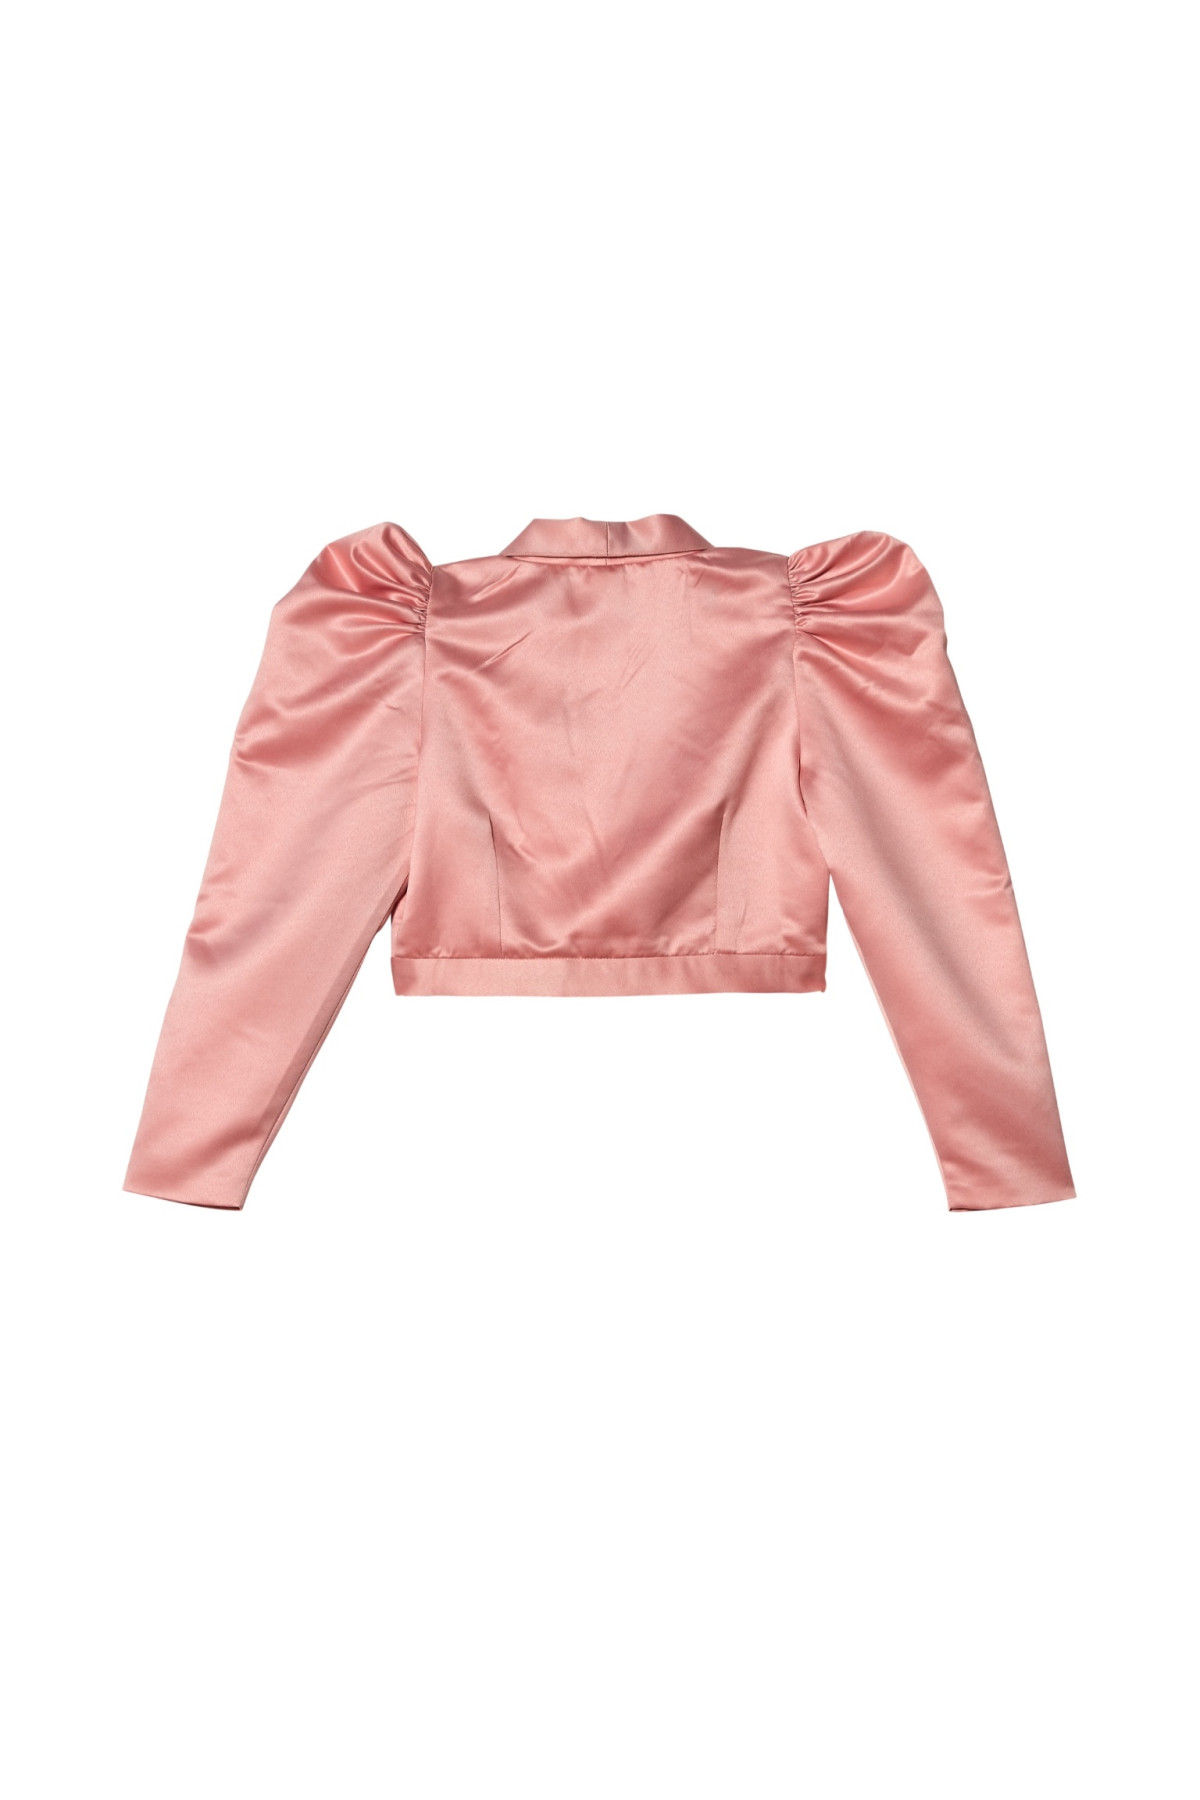 Rent Tutu du Monde Her Grace Jacket in Pink Chablis